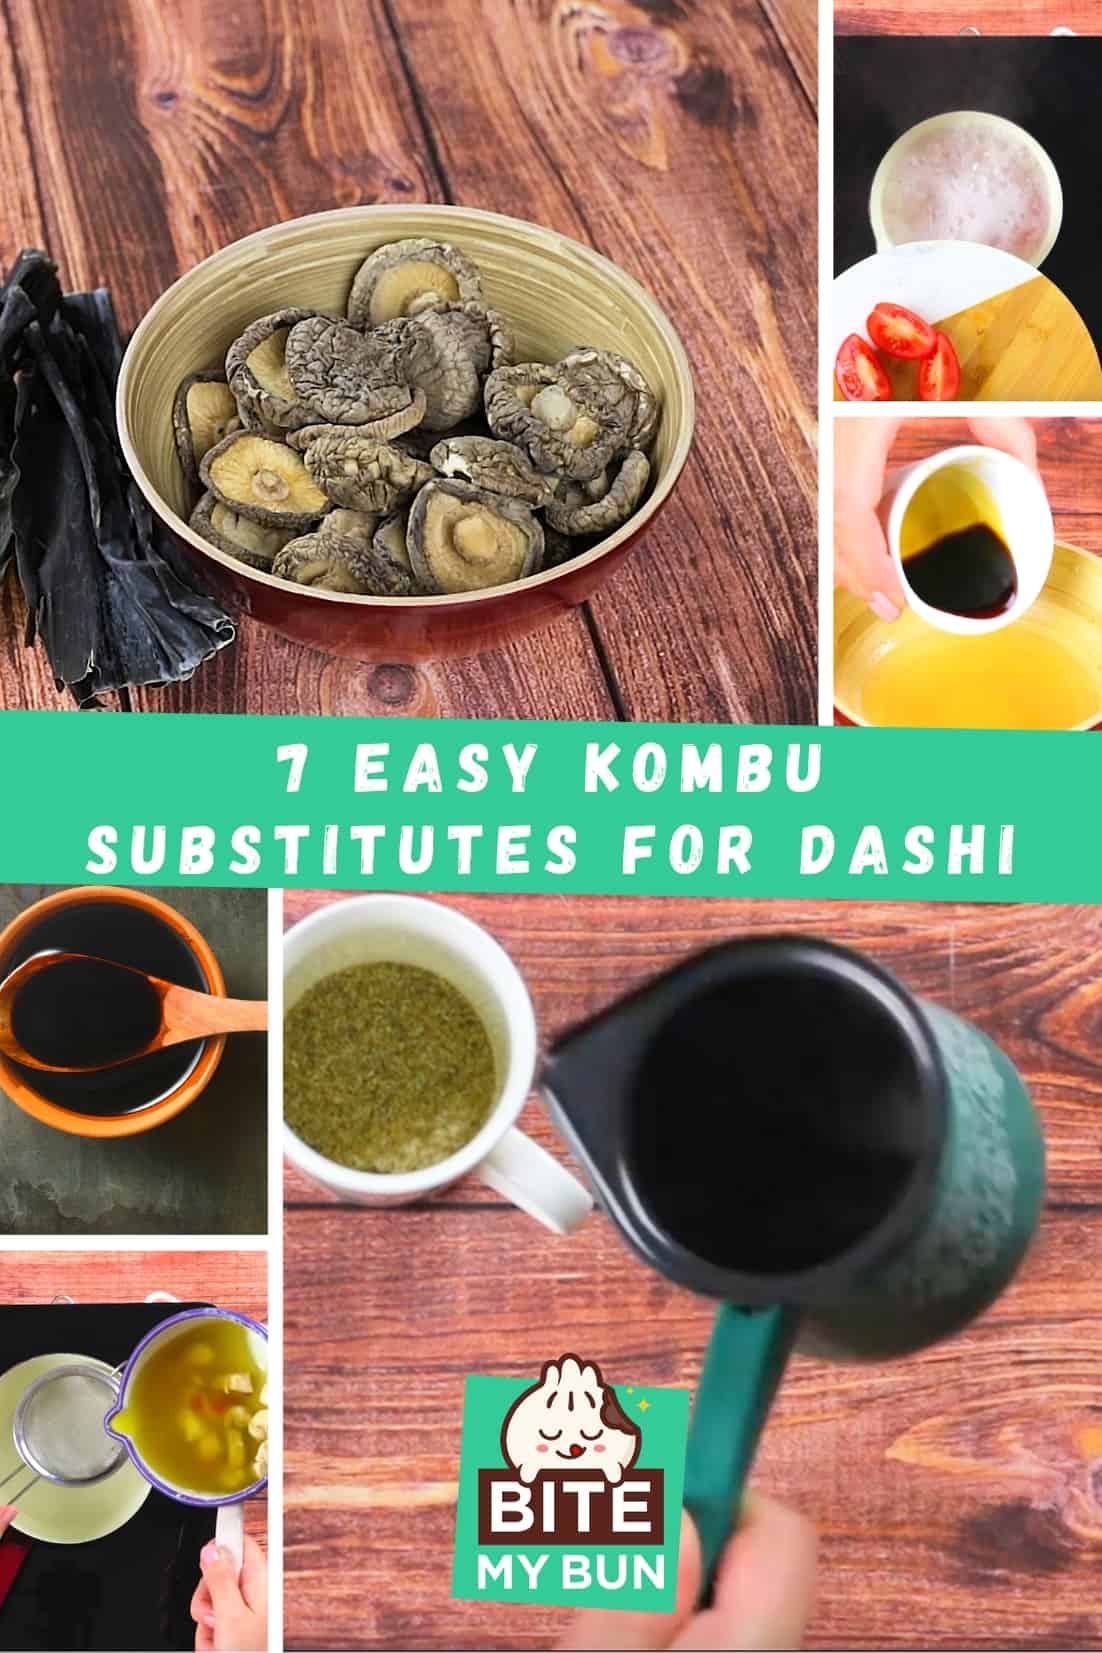 7 easy kombu substitutes for dashi